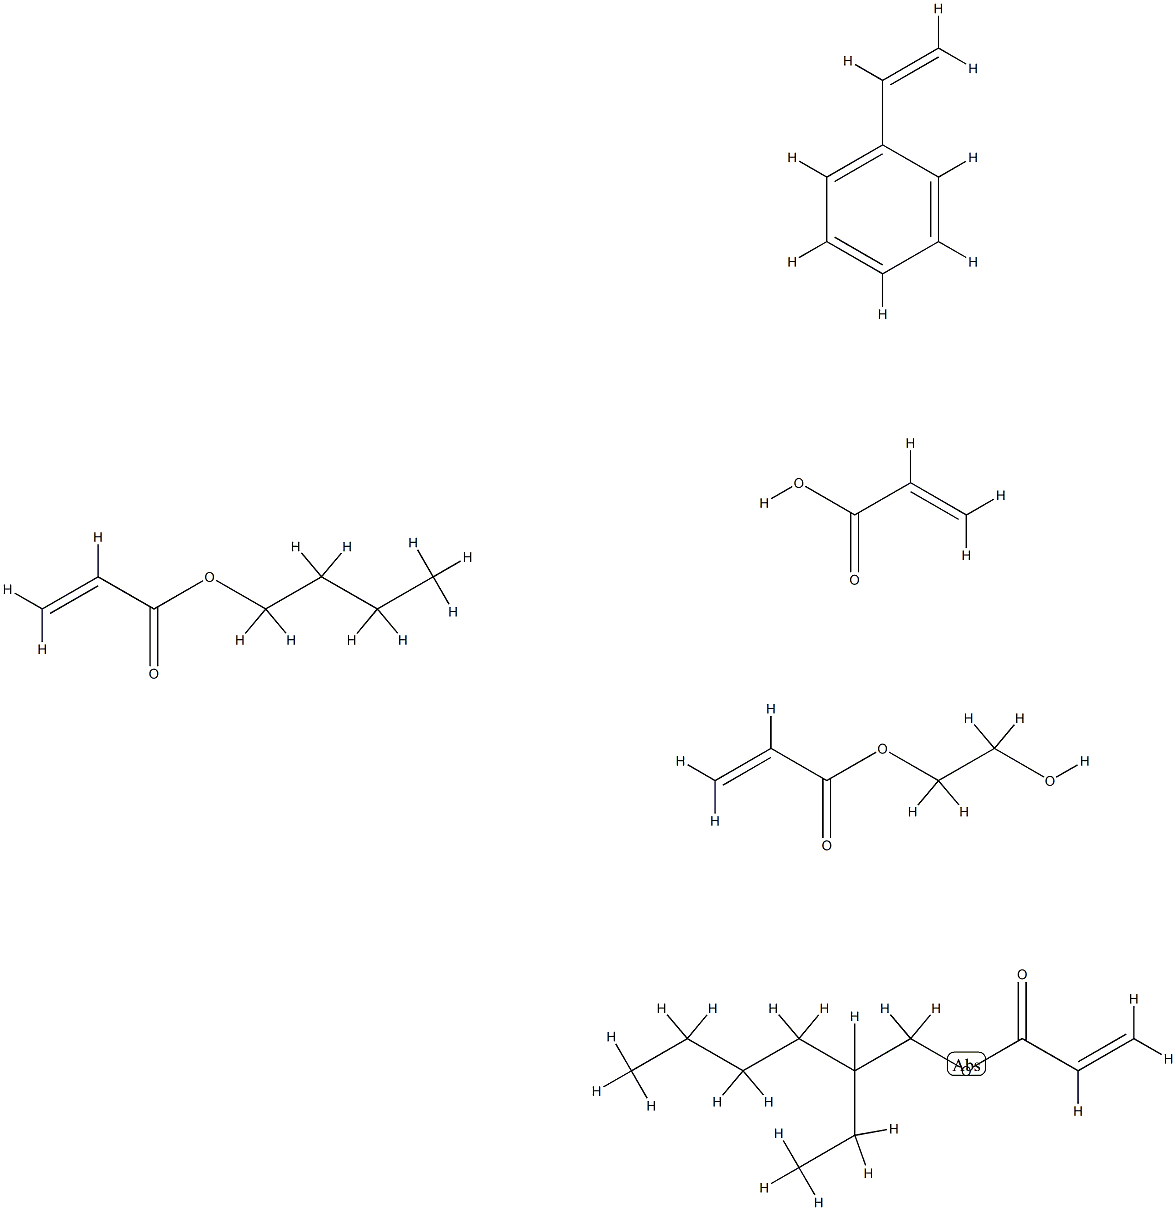 2-Propenoic acid, polymer with butyl 2-propenoate, ethenylbenzene, 2-ethylhexyl 2-propenoate and 2-hydroxyethyl 2-propenoate|